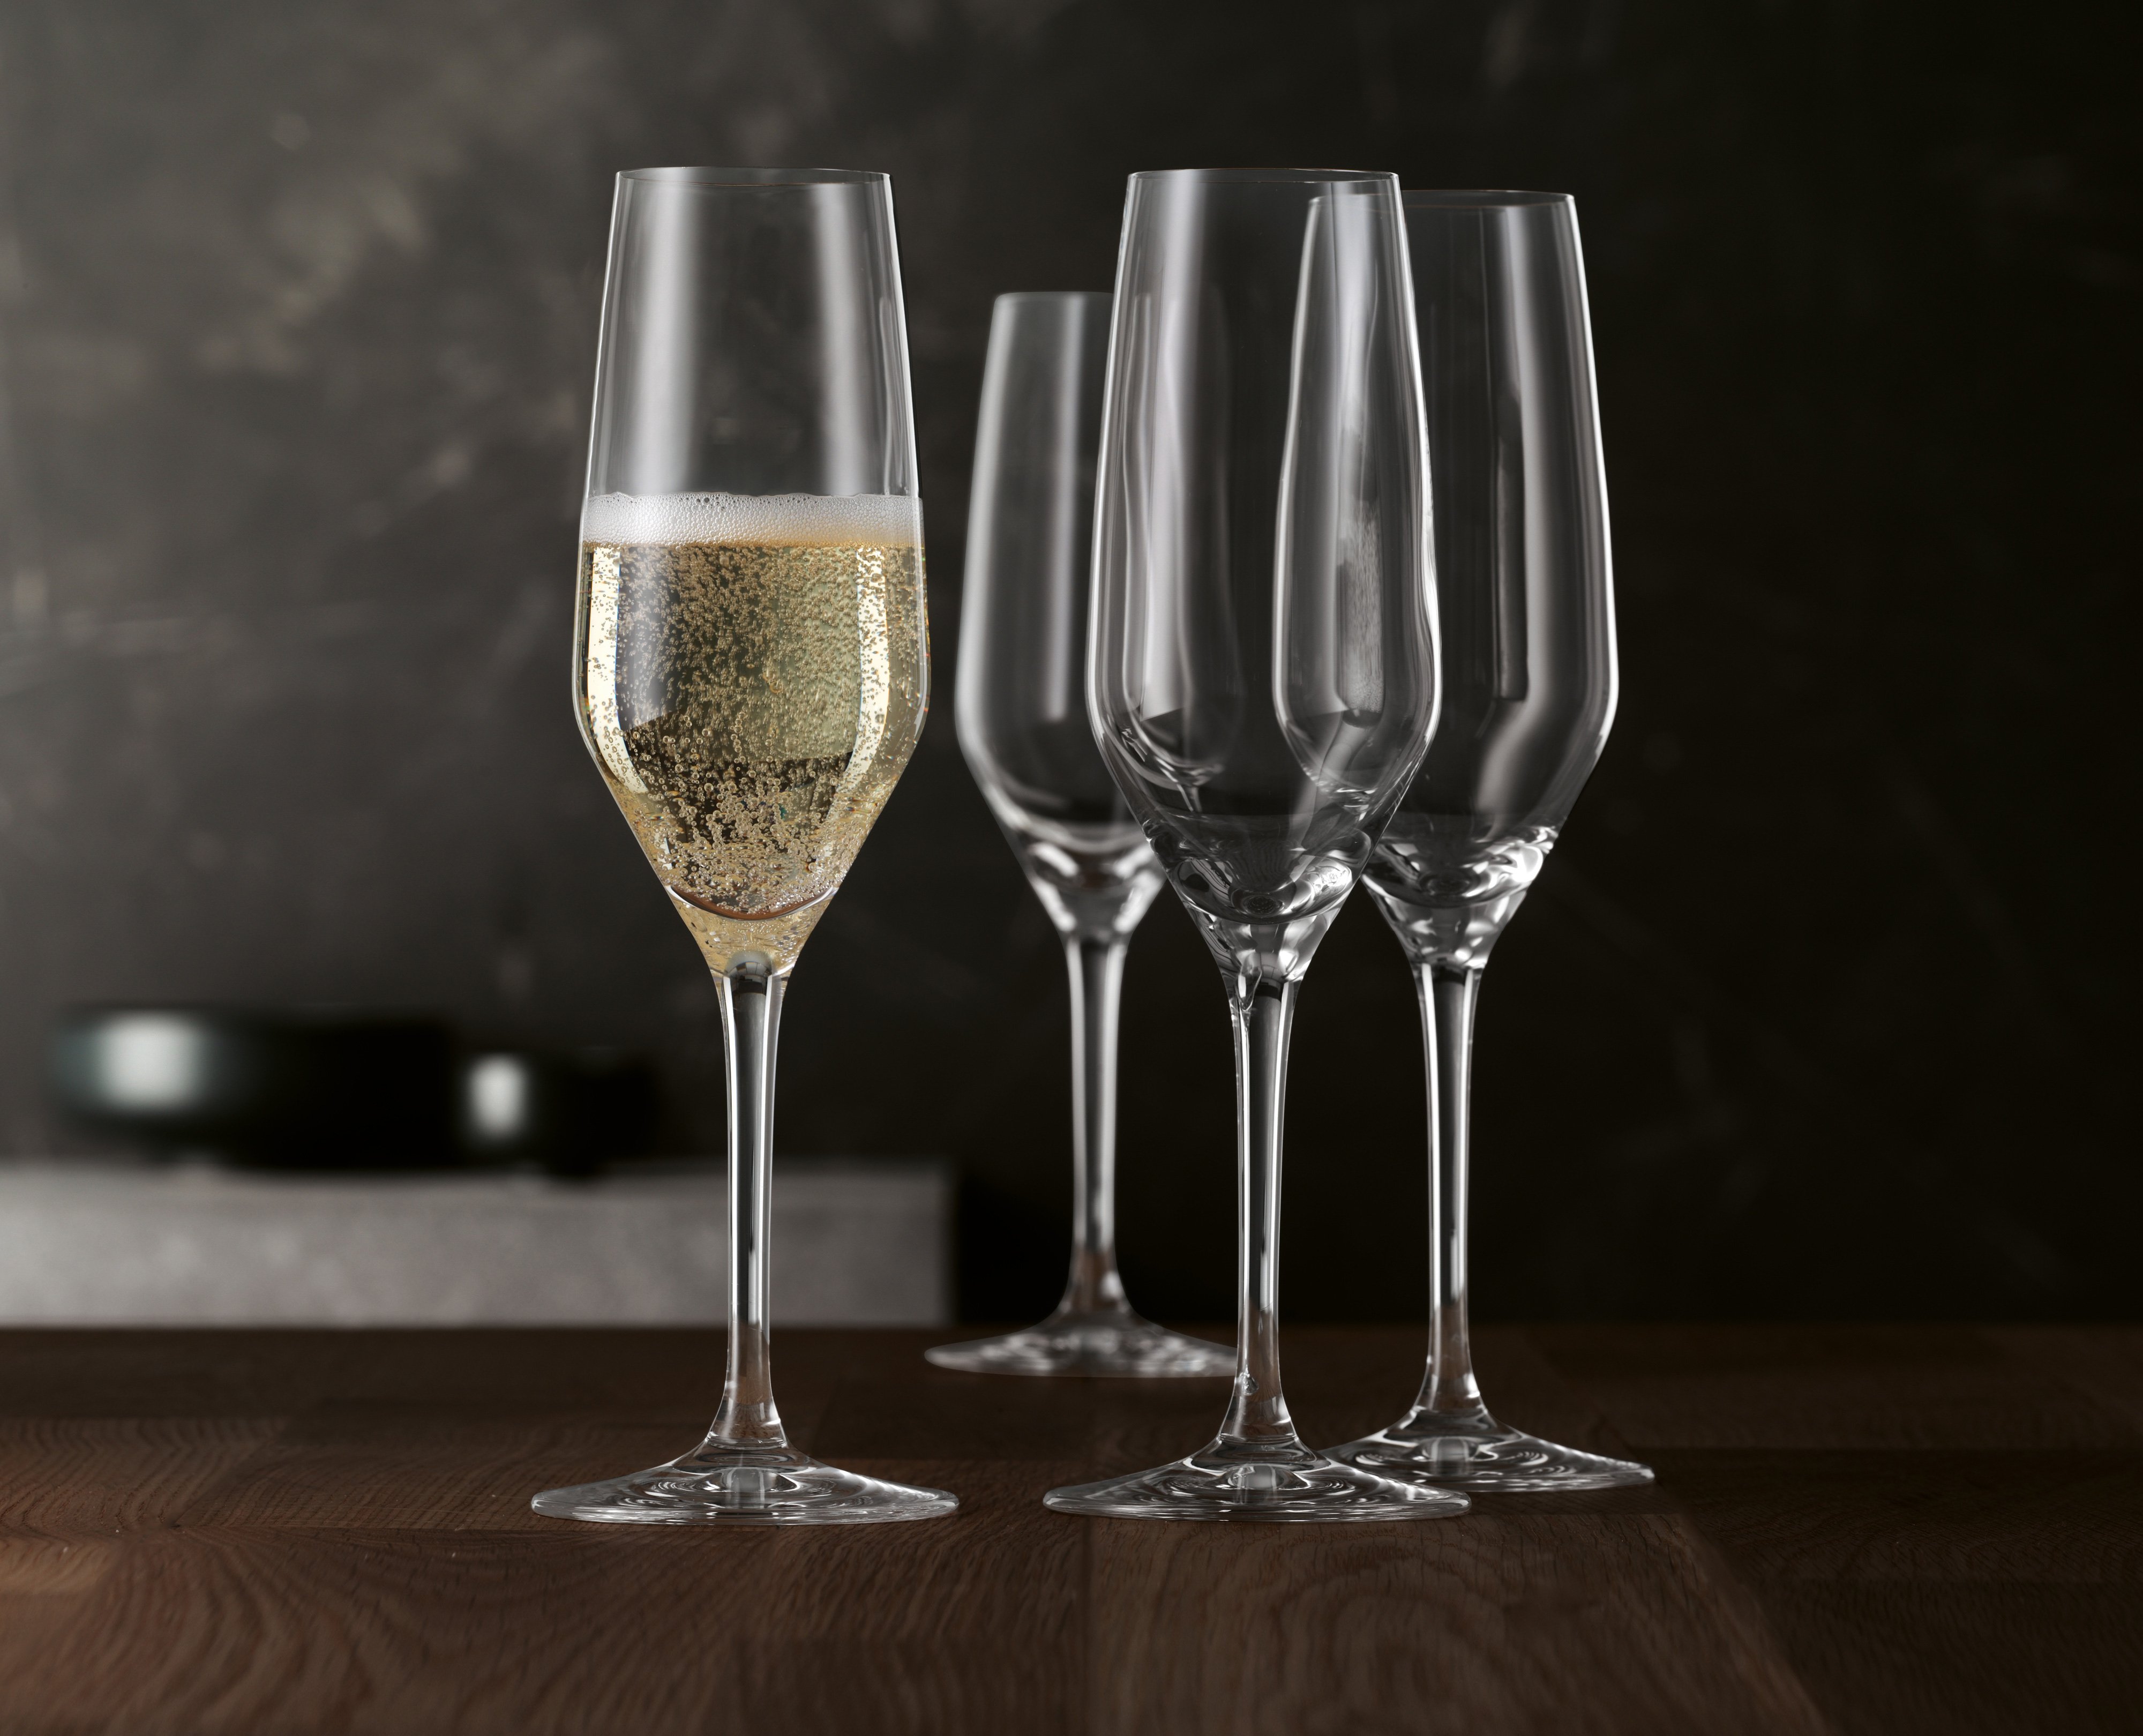 Spiegelau Champagne Glass Set, 7.41 oz - 4 count